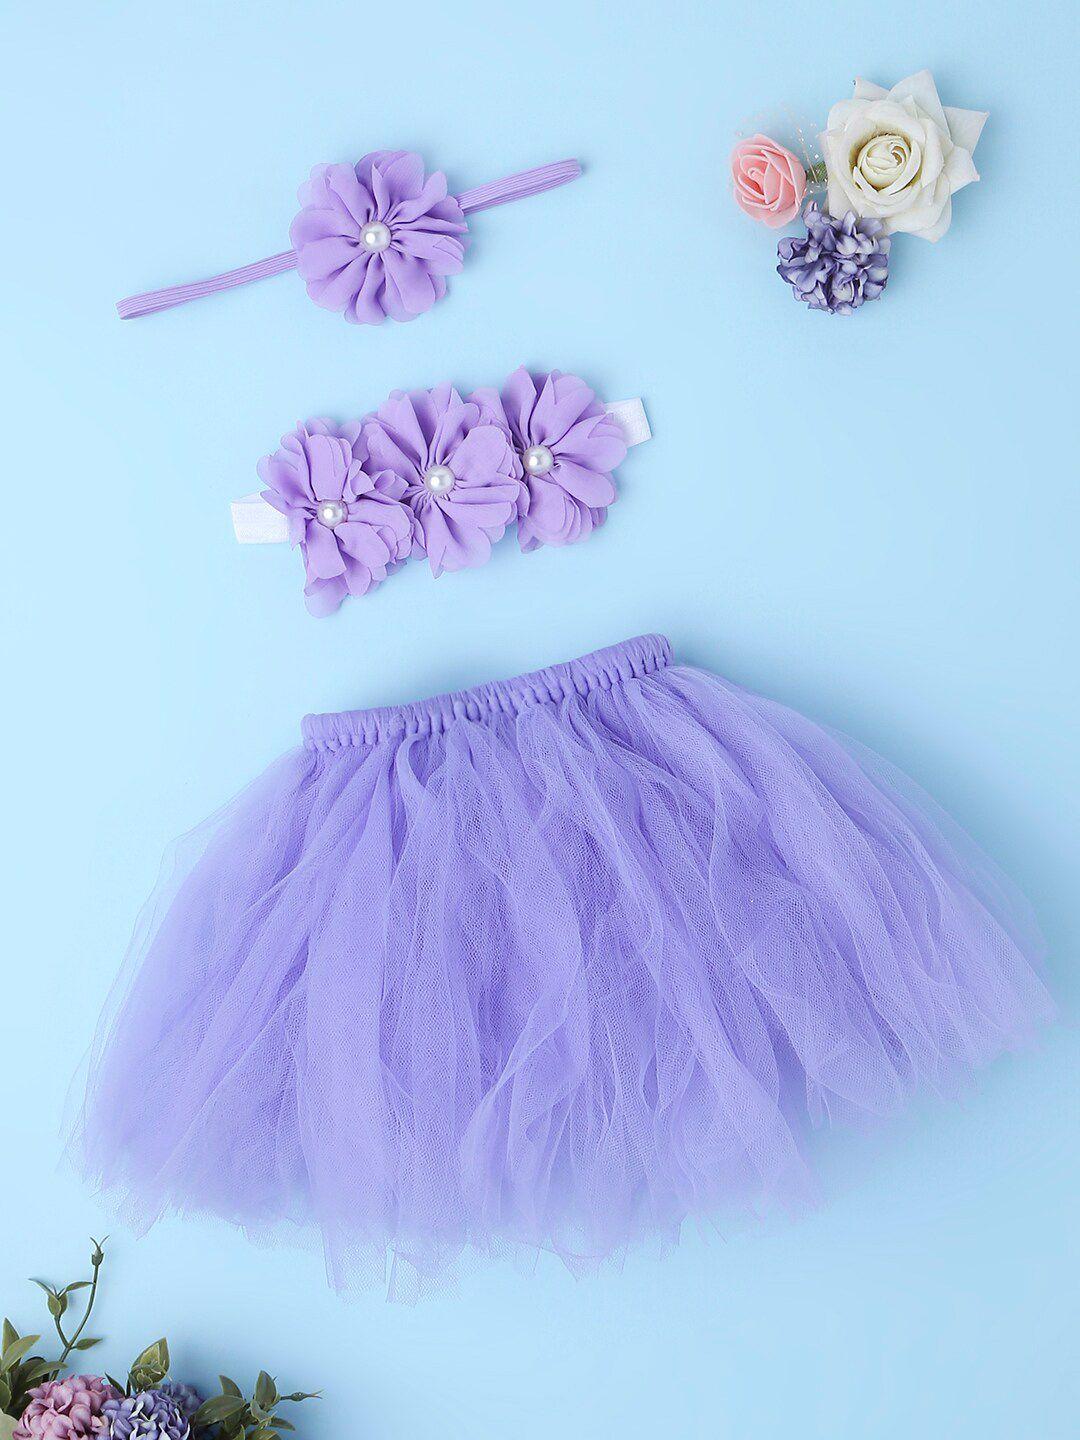 babymoon unisex kids lavender-colored tutu skirt costume photoshoot props